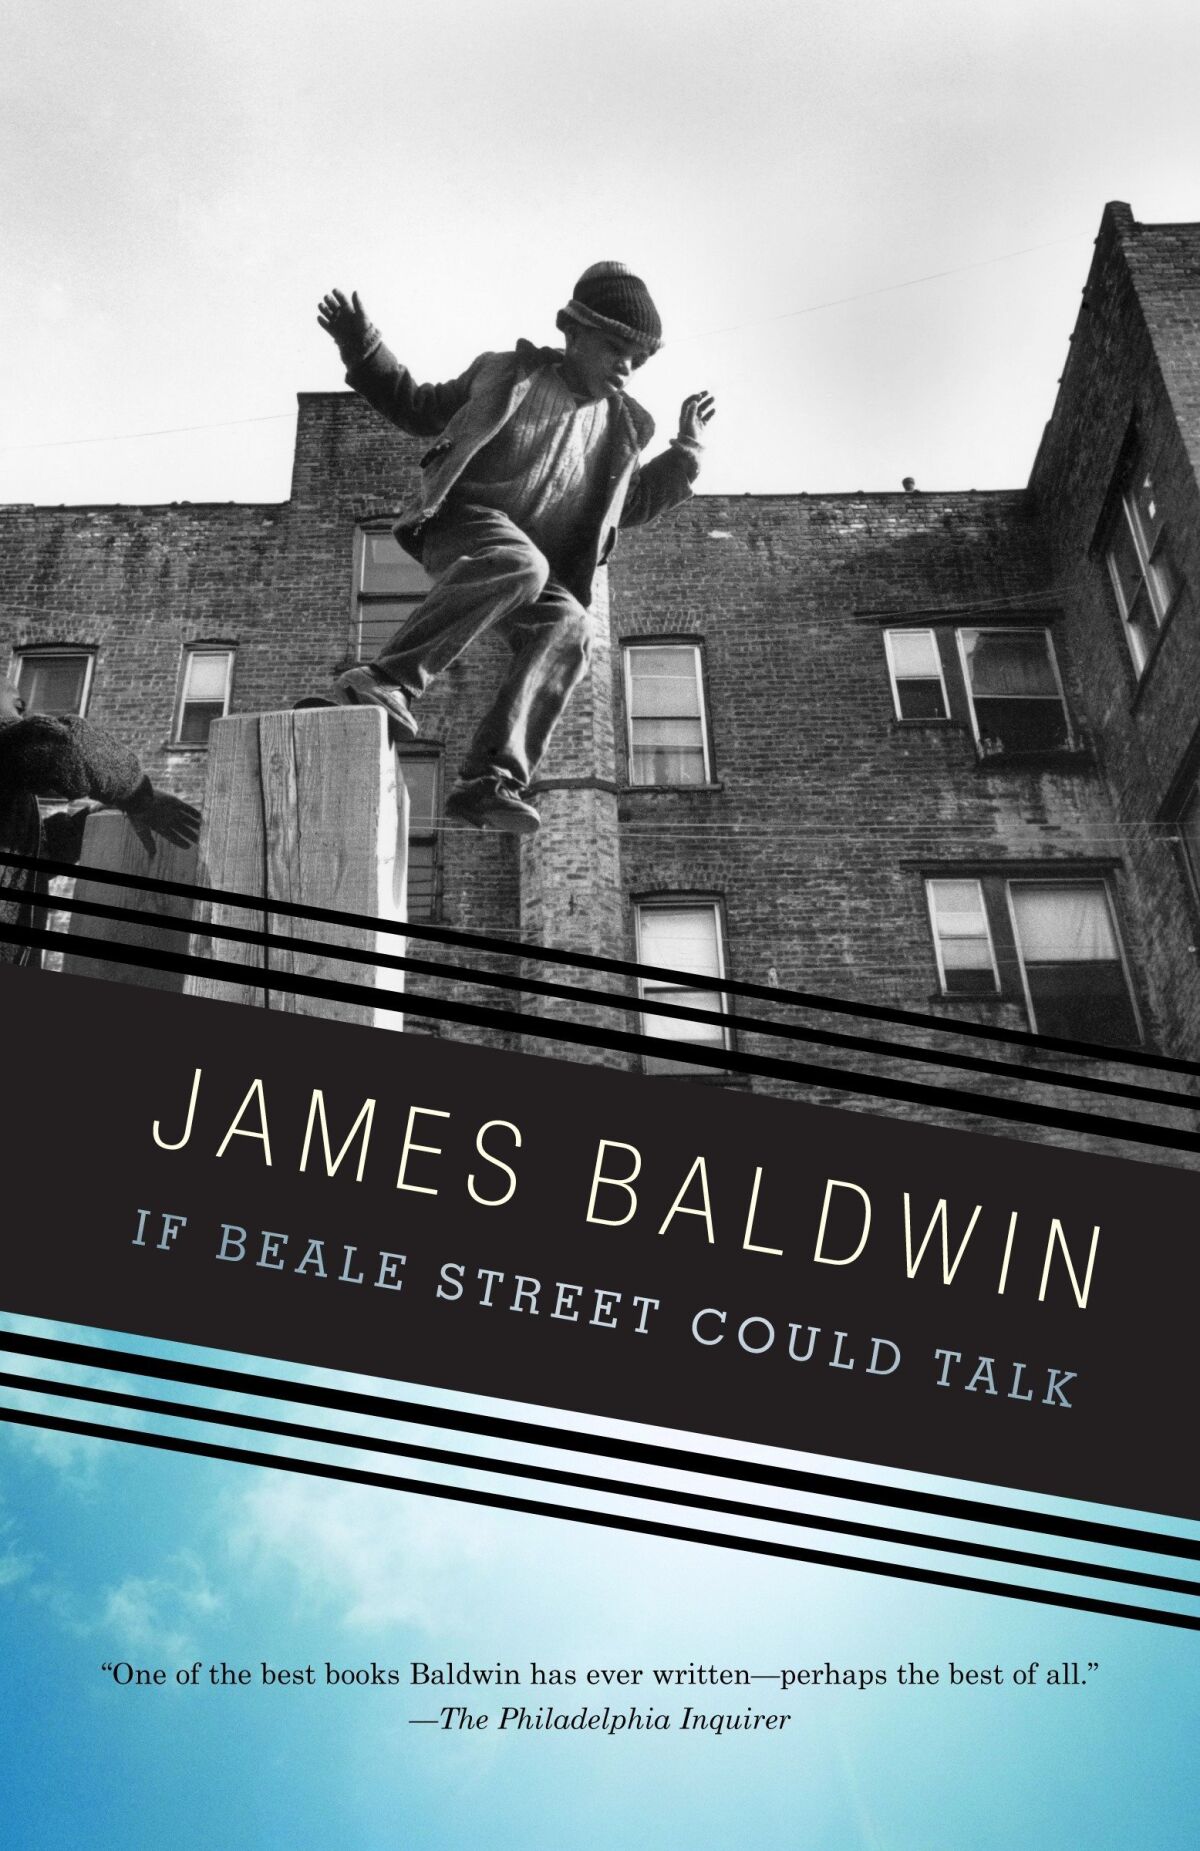 James Baldwin's novel "If Beale Street Could Talk."